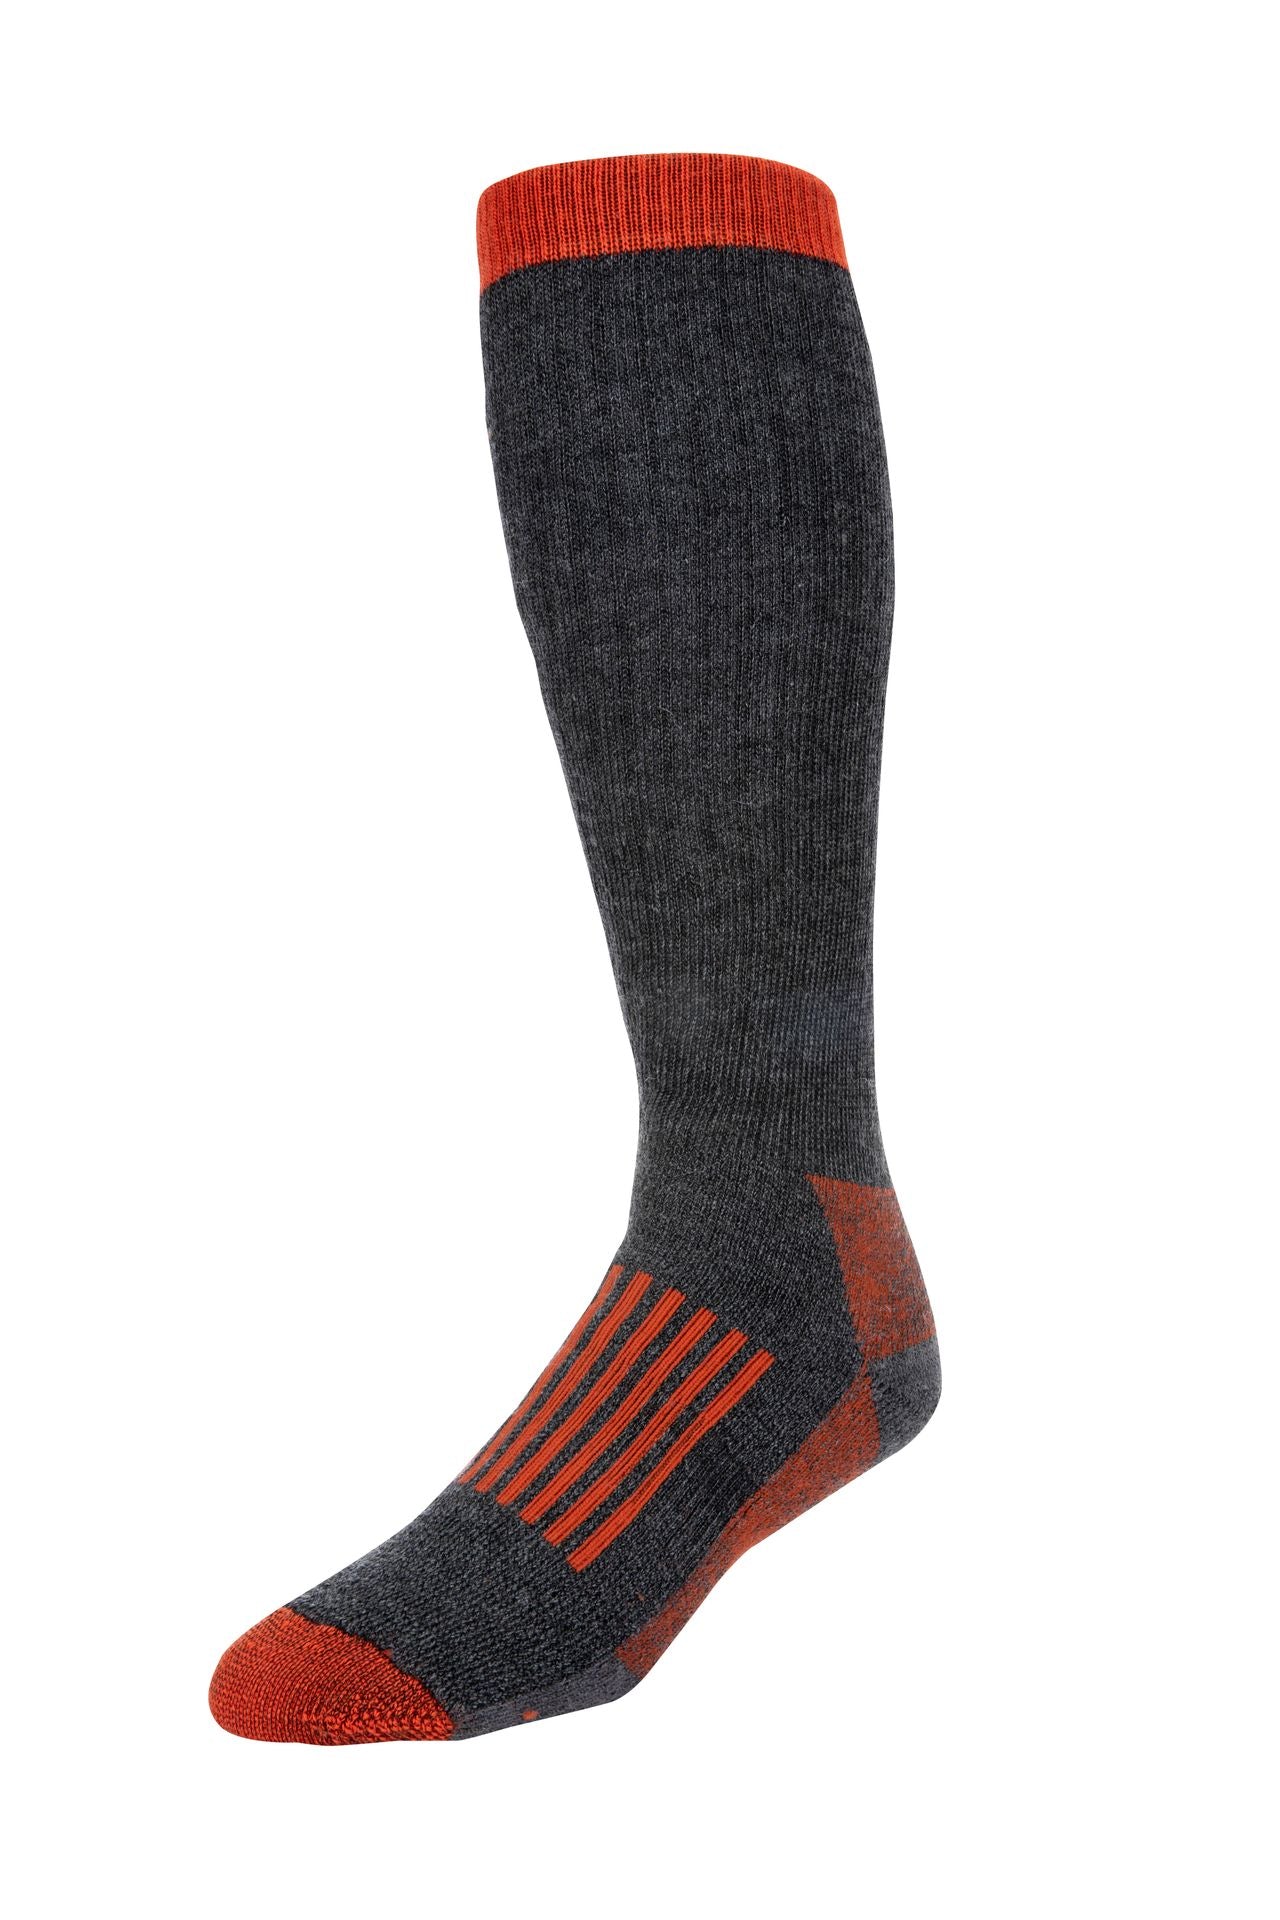 Merino Thermal OTC Sock